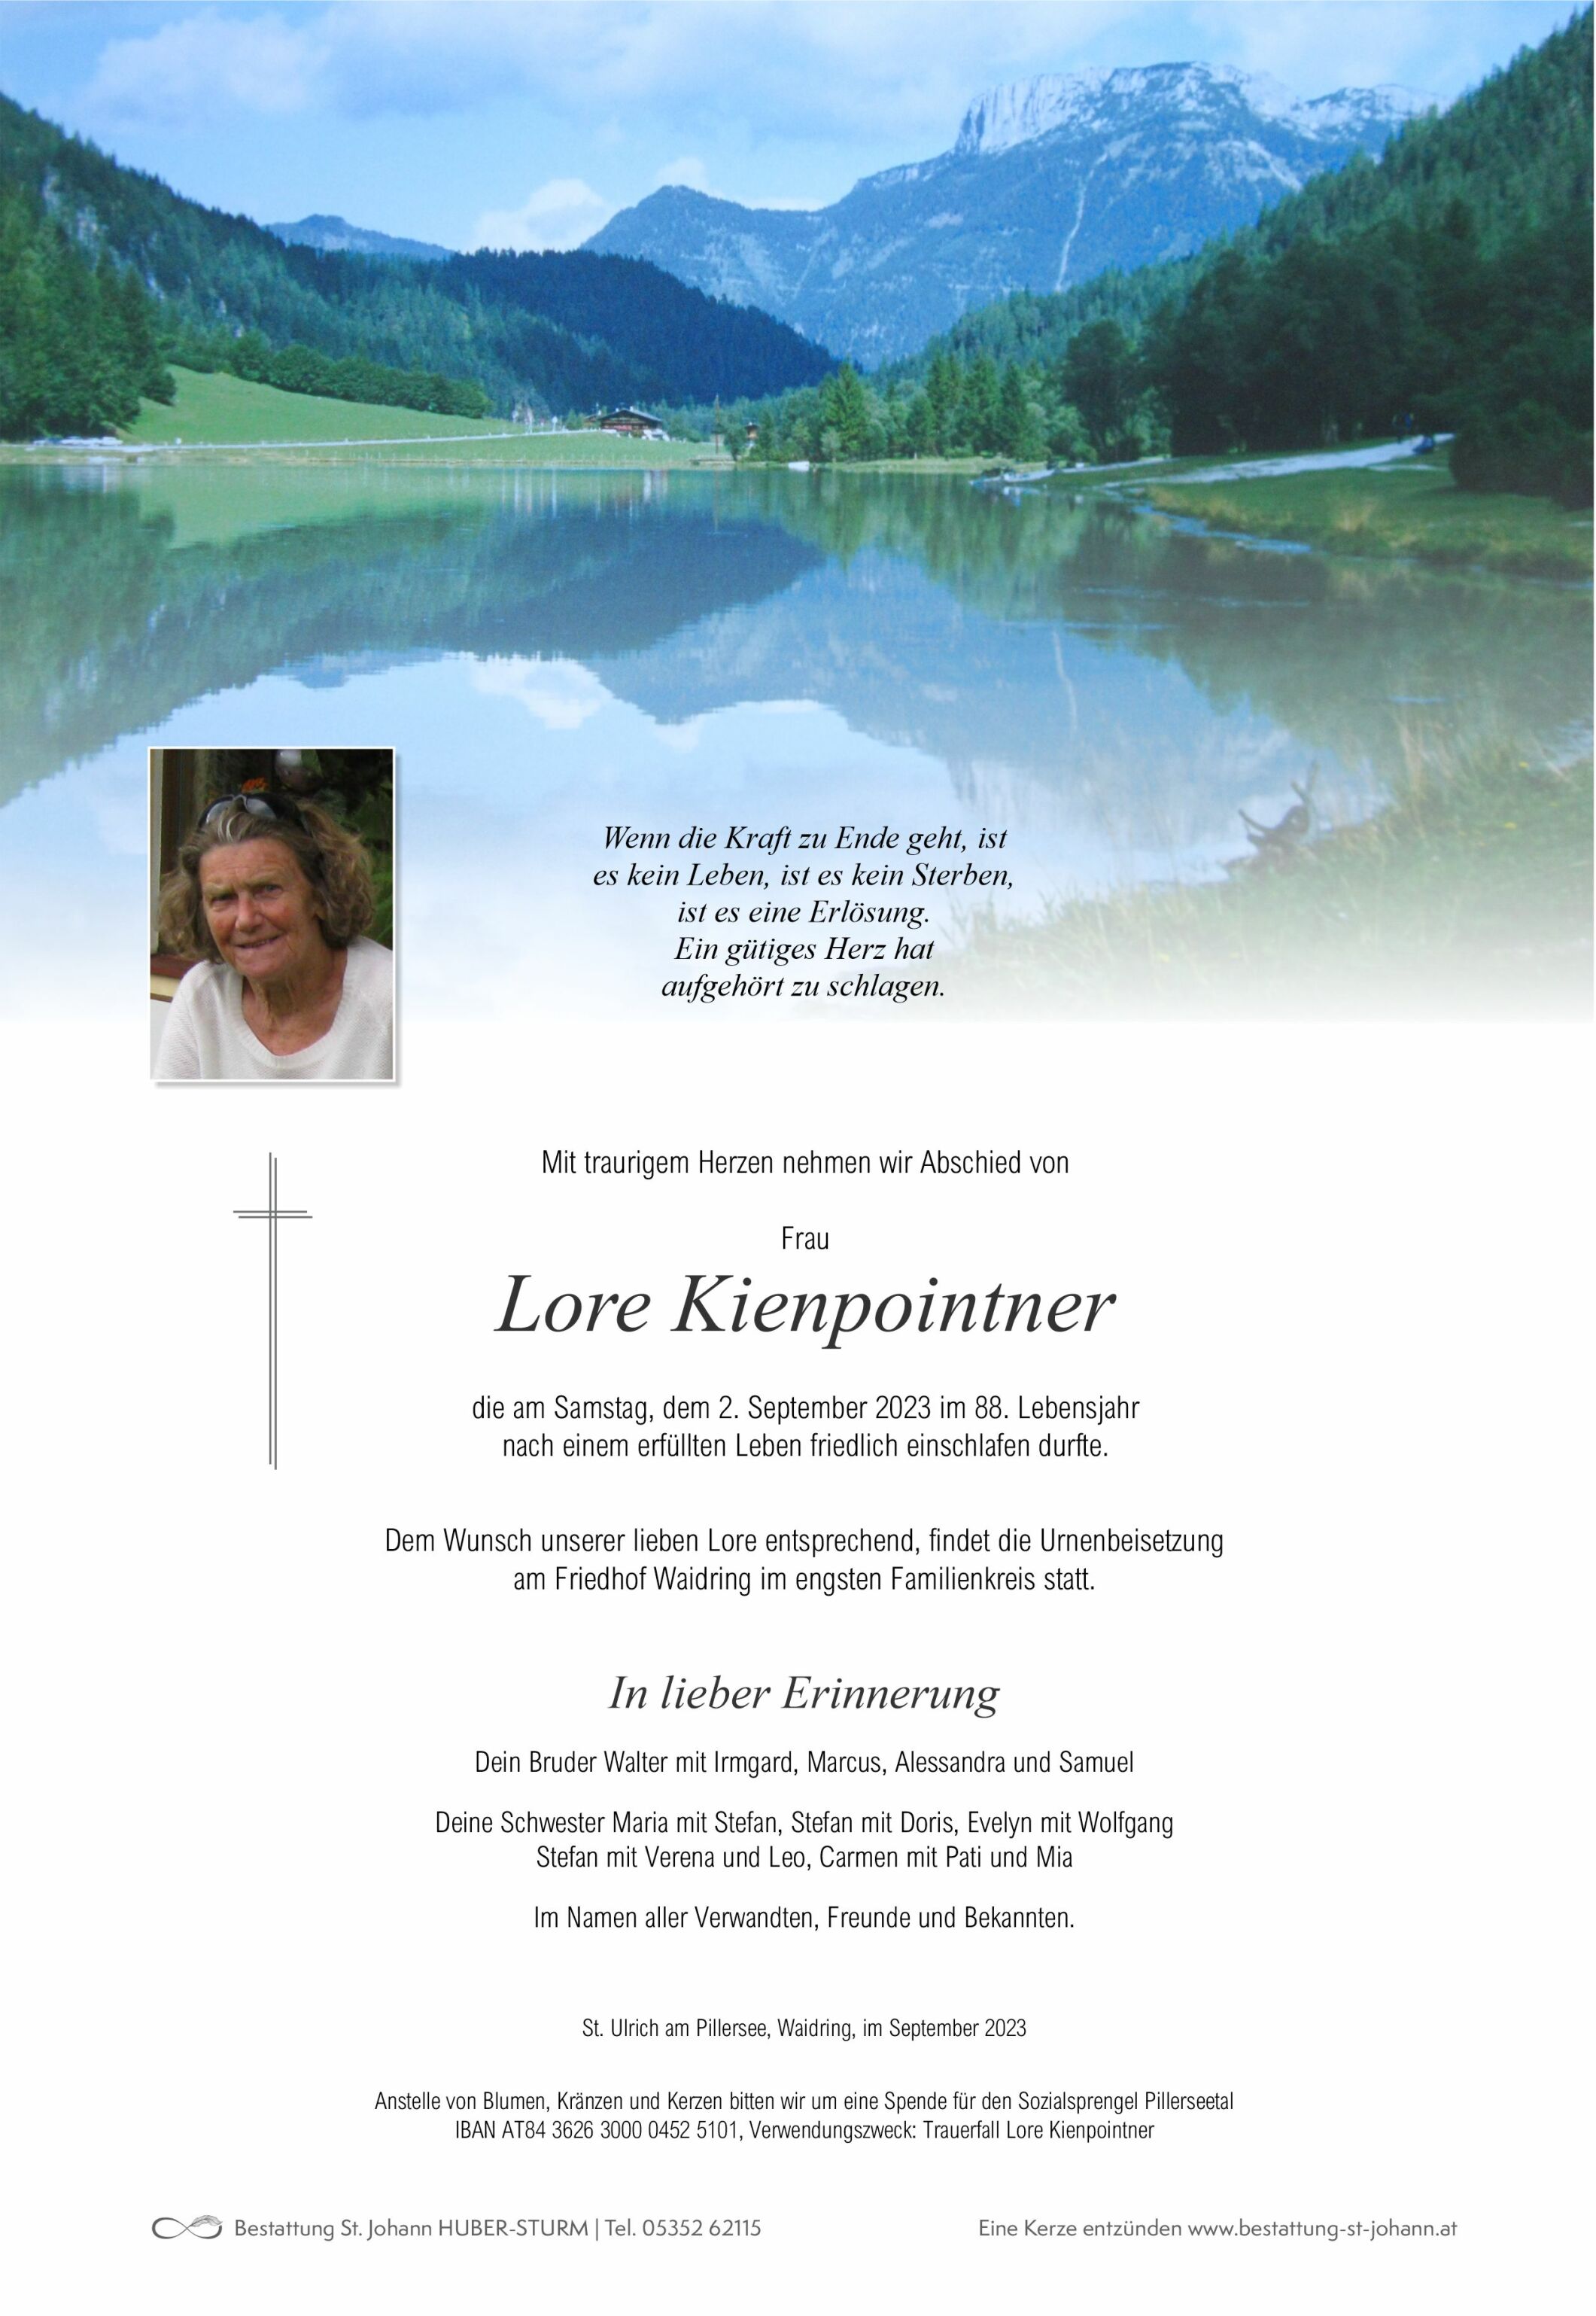 Lore Kienpointner